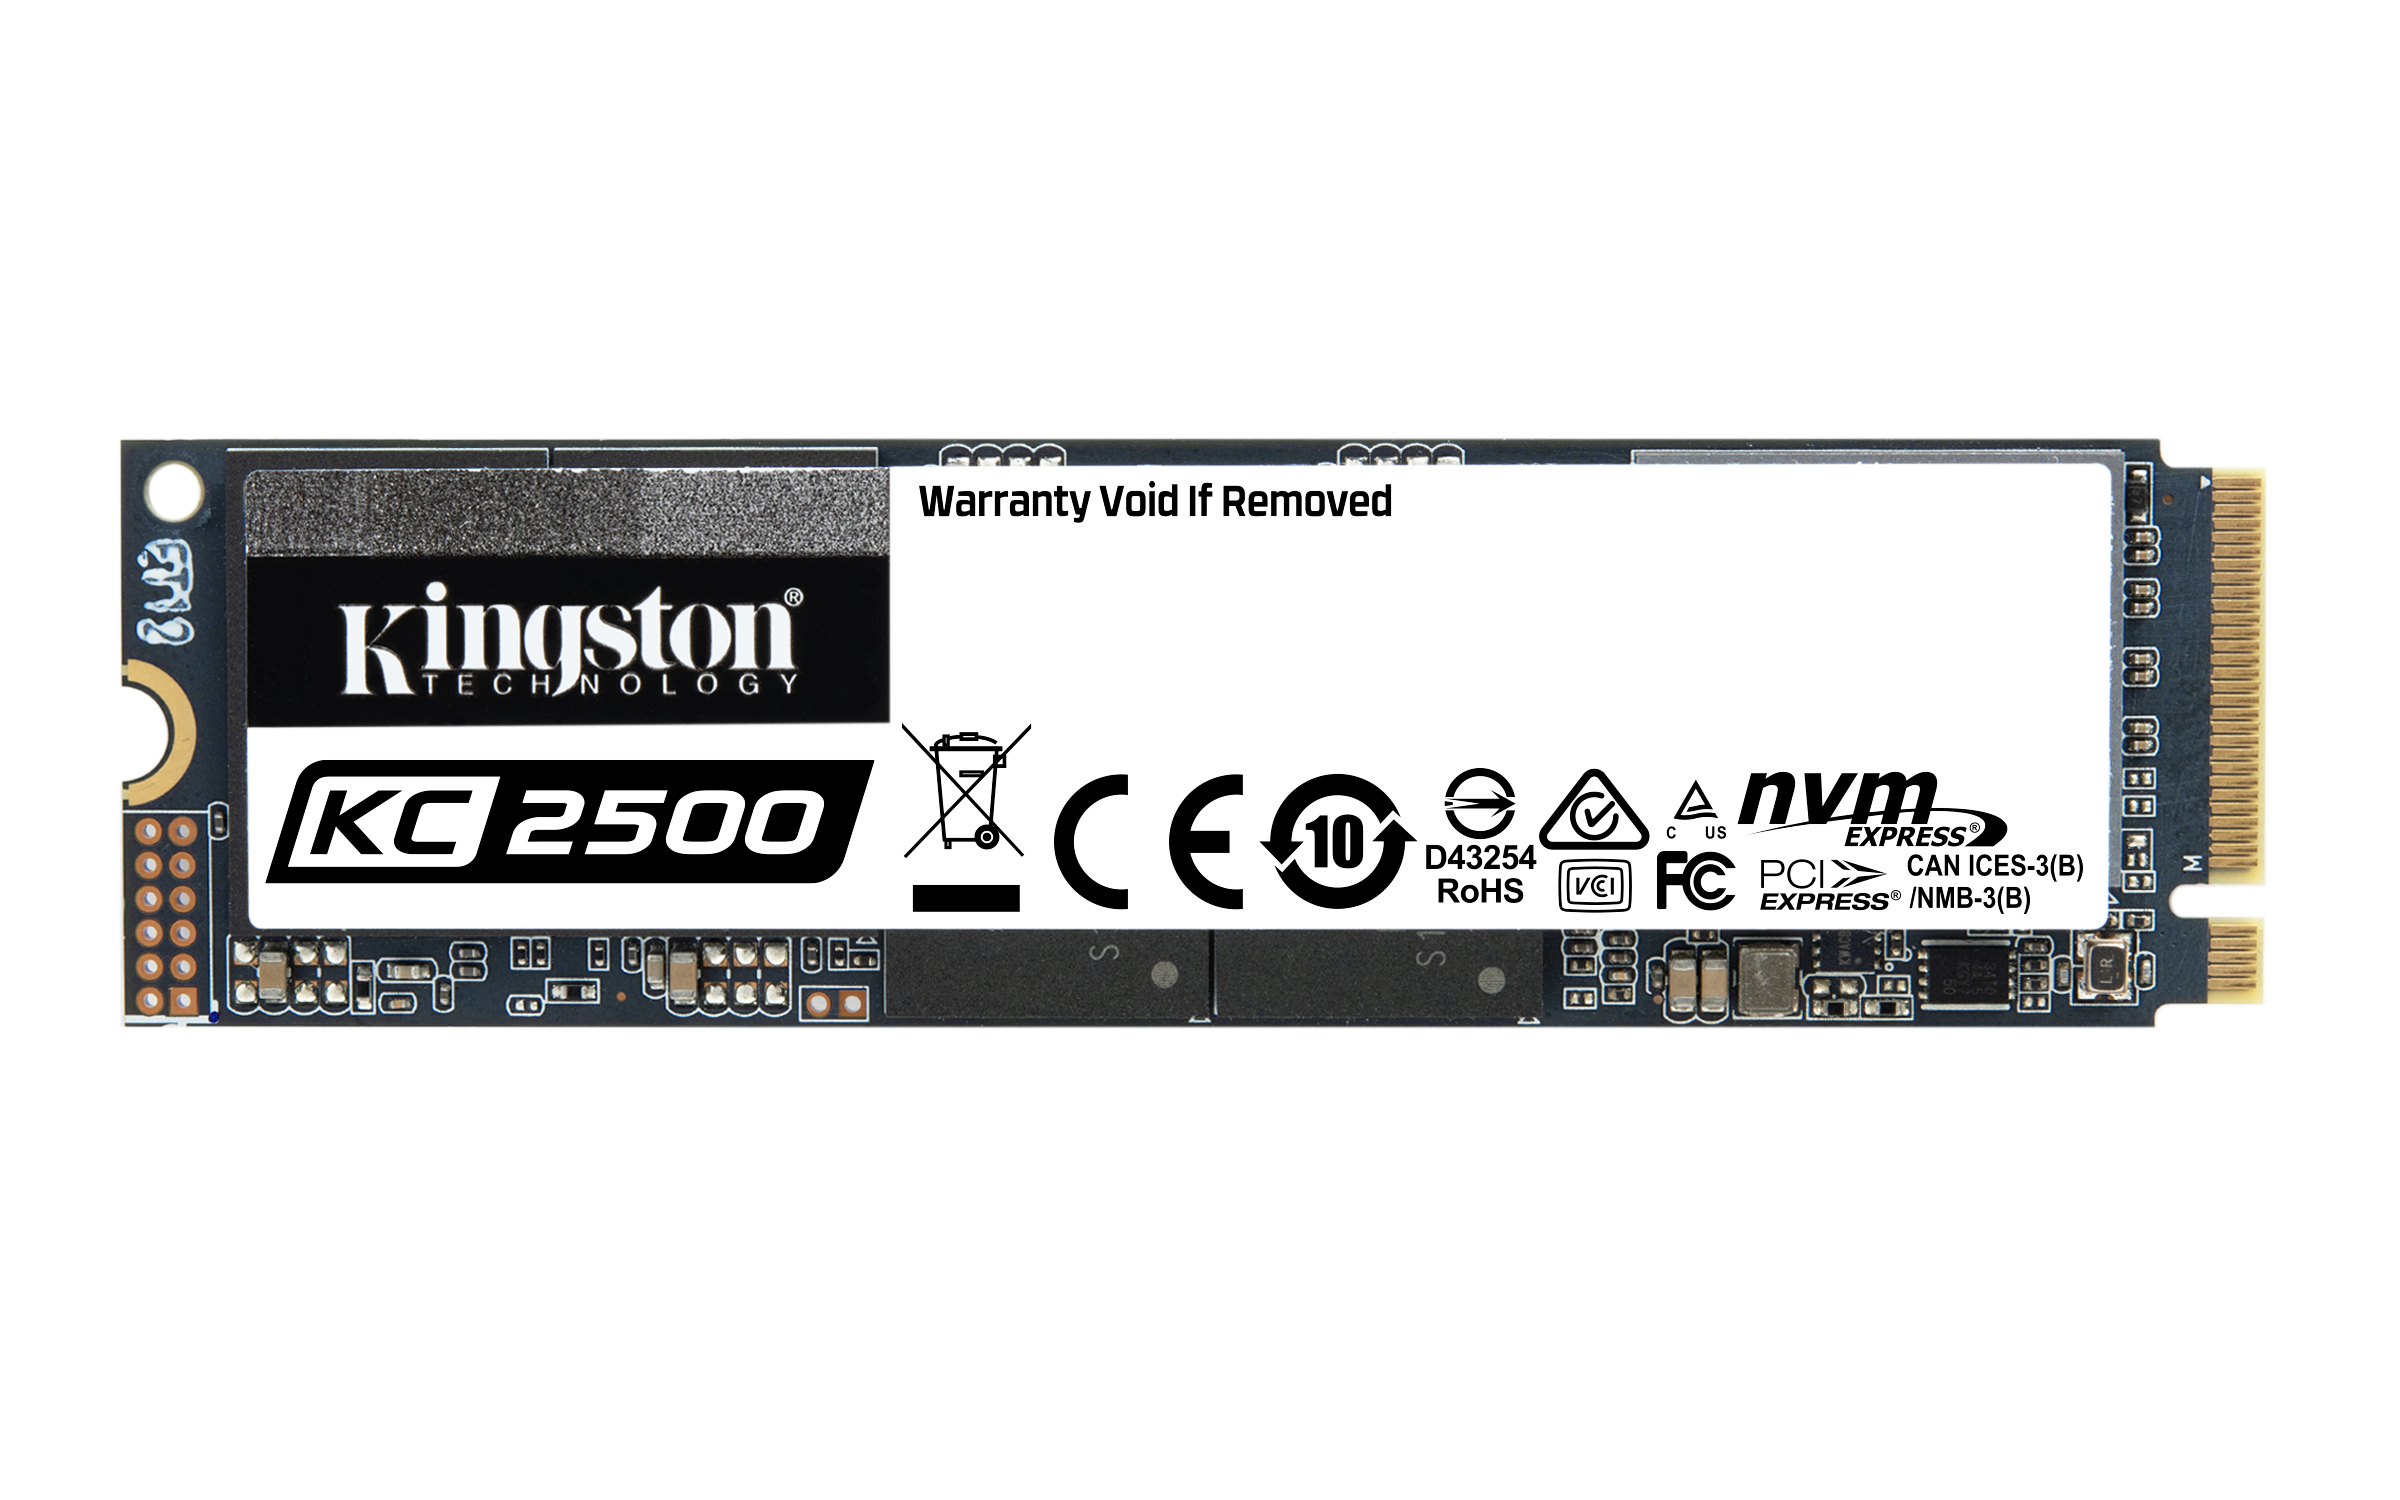 Kingston Releases Next-Gen KC2500 NVMe PCIe SSD | Business Wire